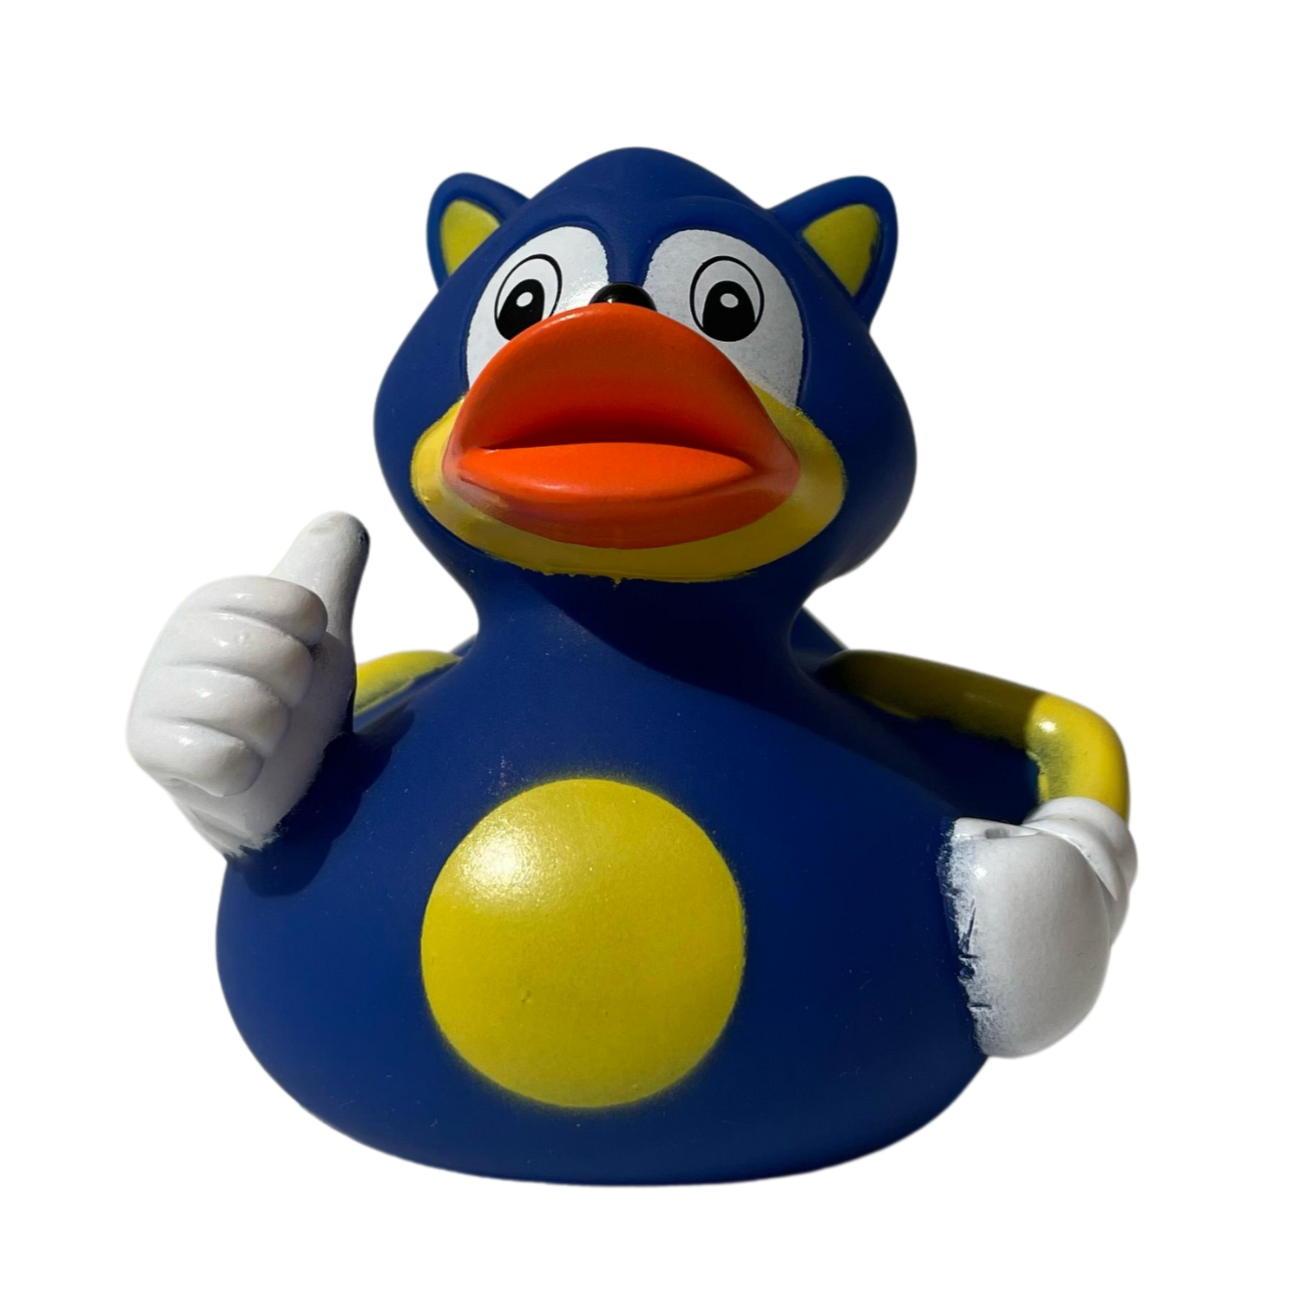 Blue Hedgehog Rubber Duck - Super Sonic Edition